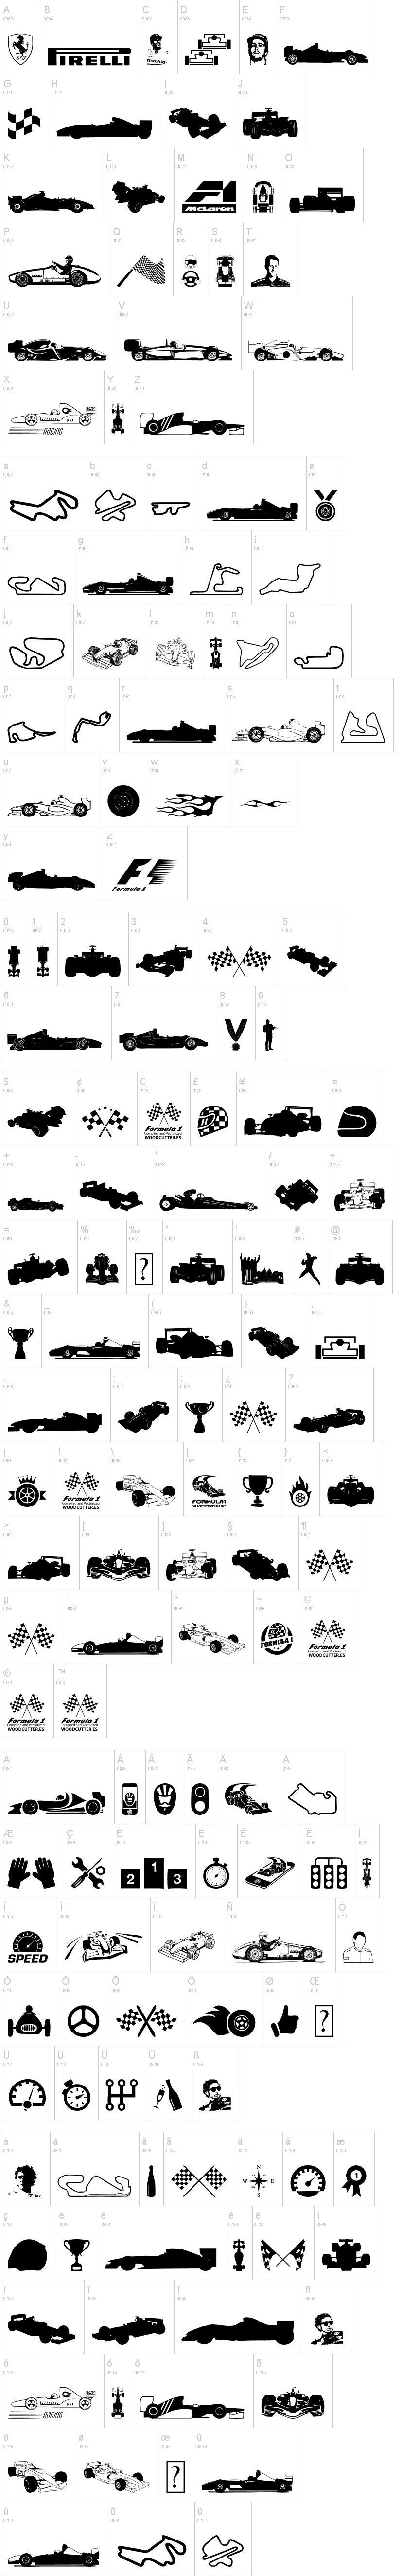 Formula 1字符映射图